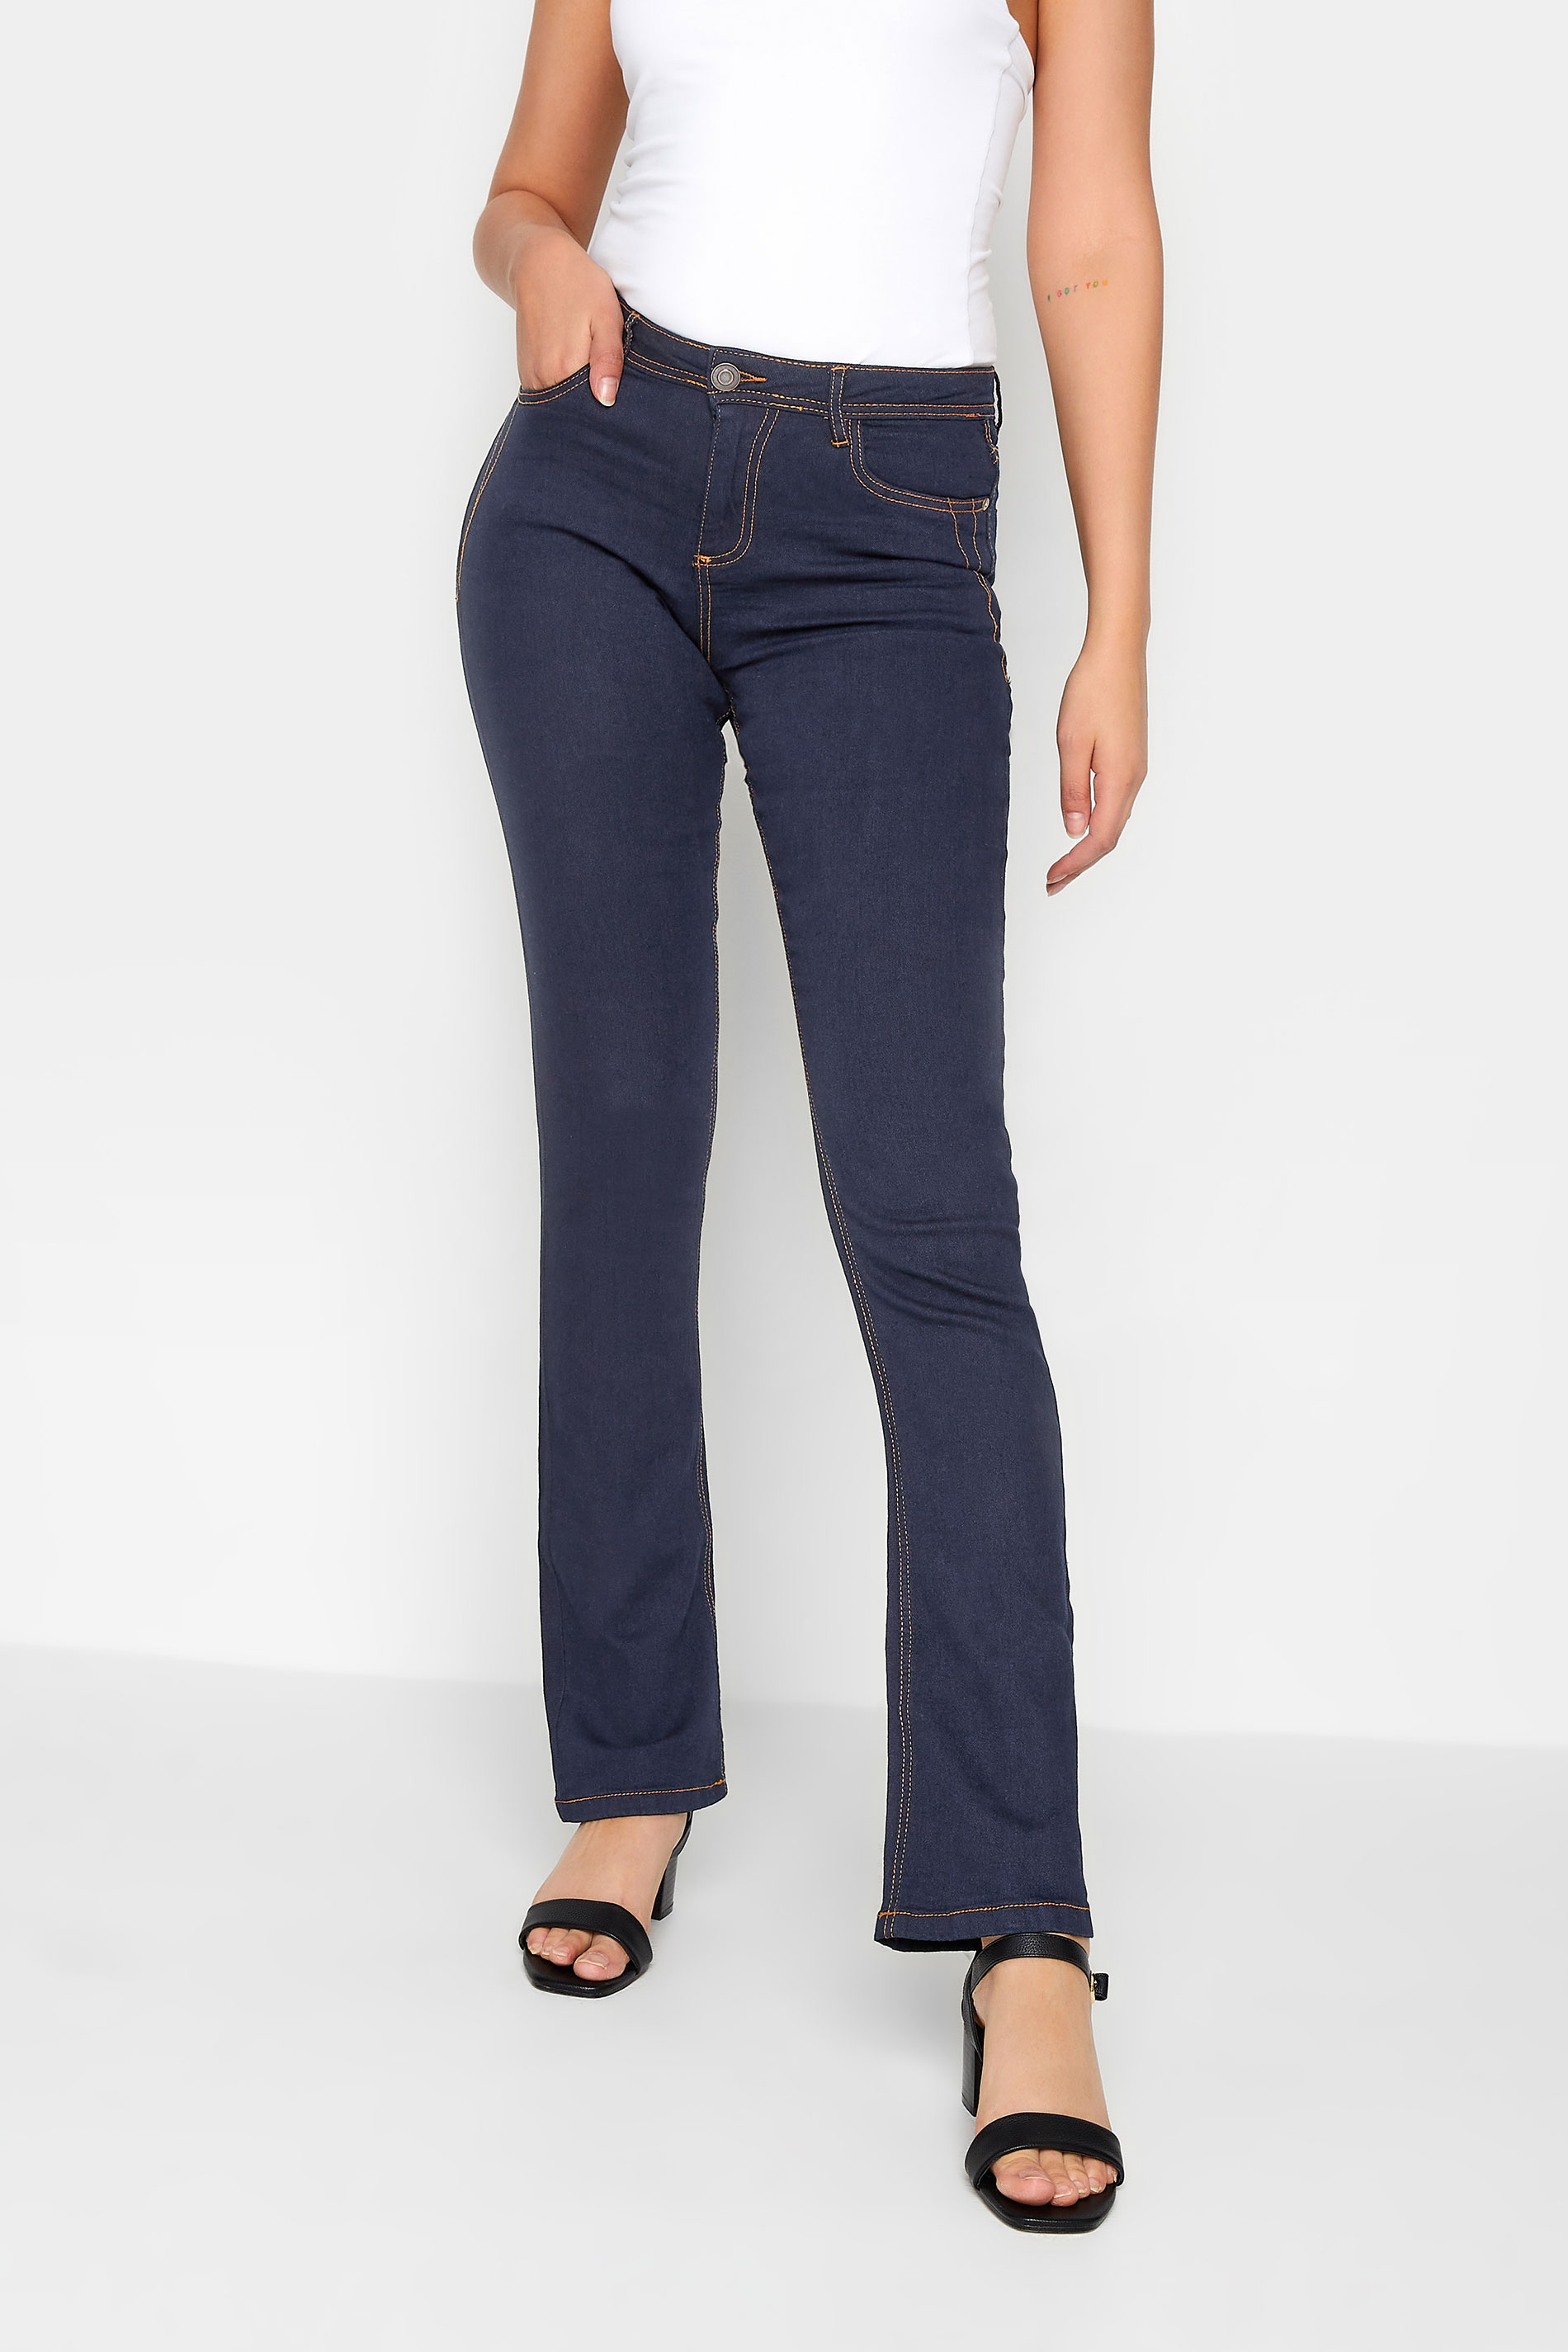 LTS Indigo Blue RAE Bootcut Jeans | Long Tall Sally 1